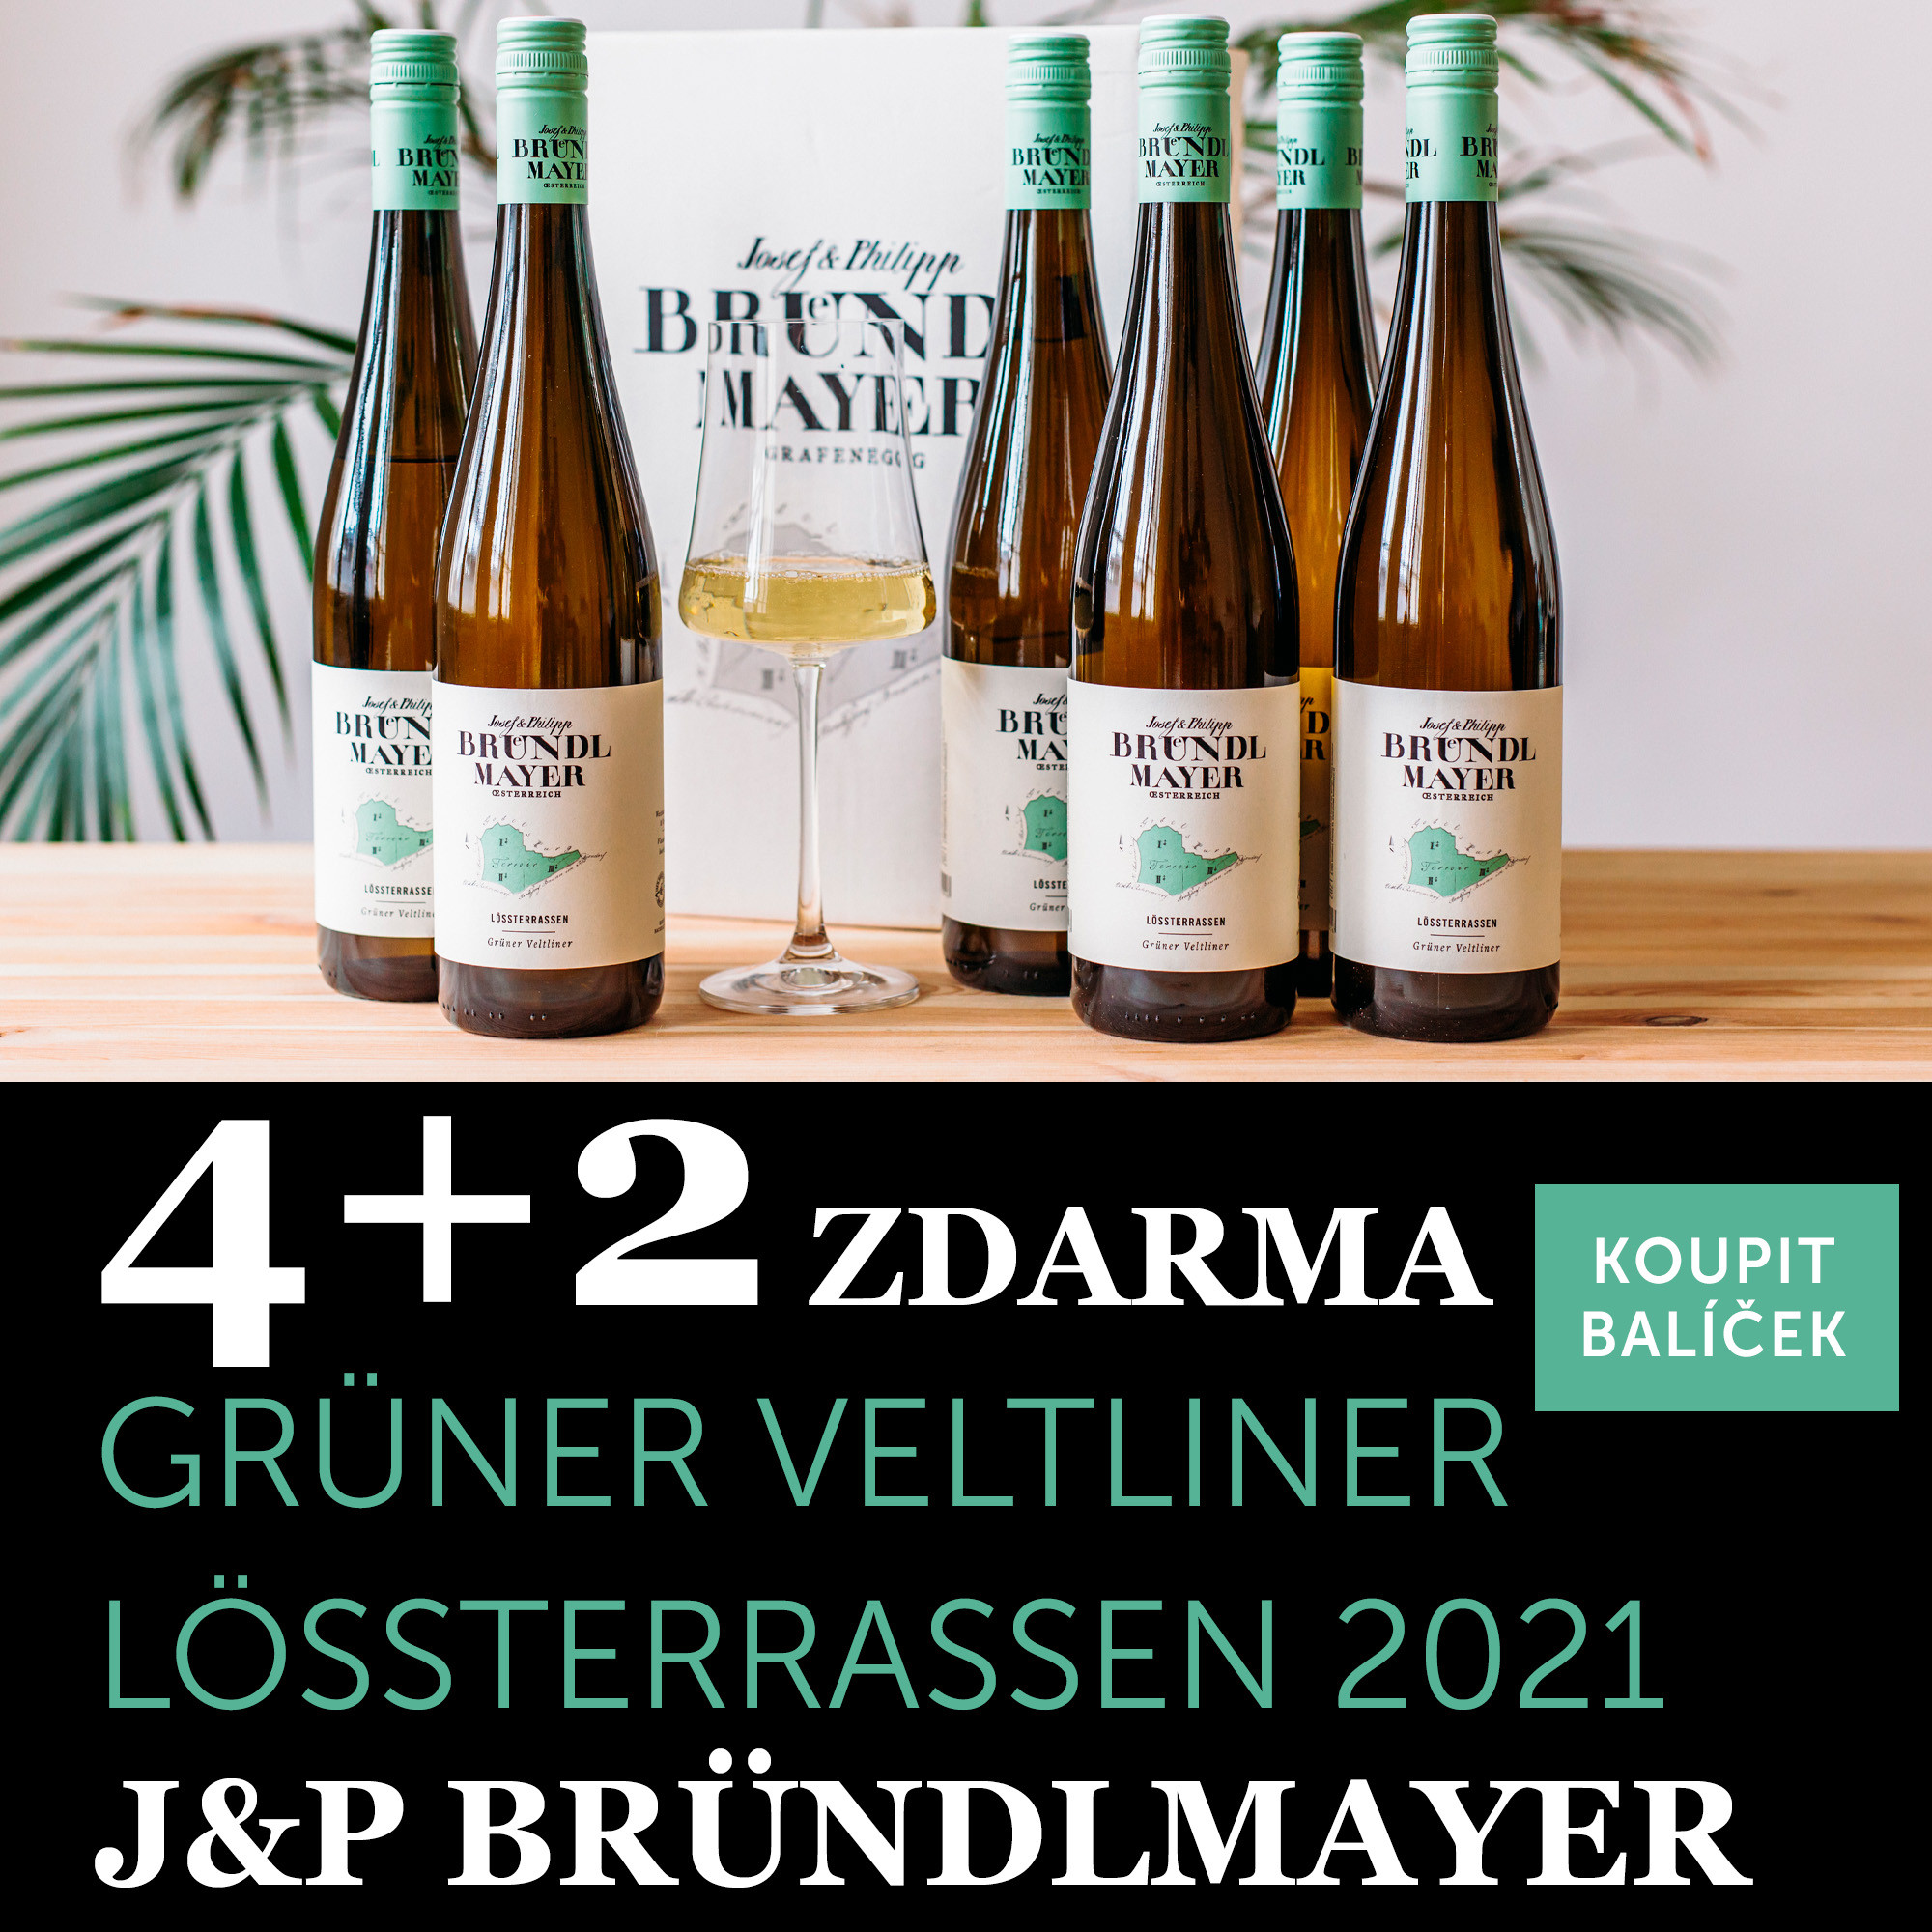 JP Bründlmayer Grüner Veltliner Lössterrassen 2021 4+2 zdarma - UKONČENO